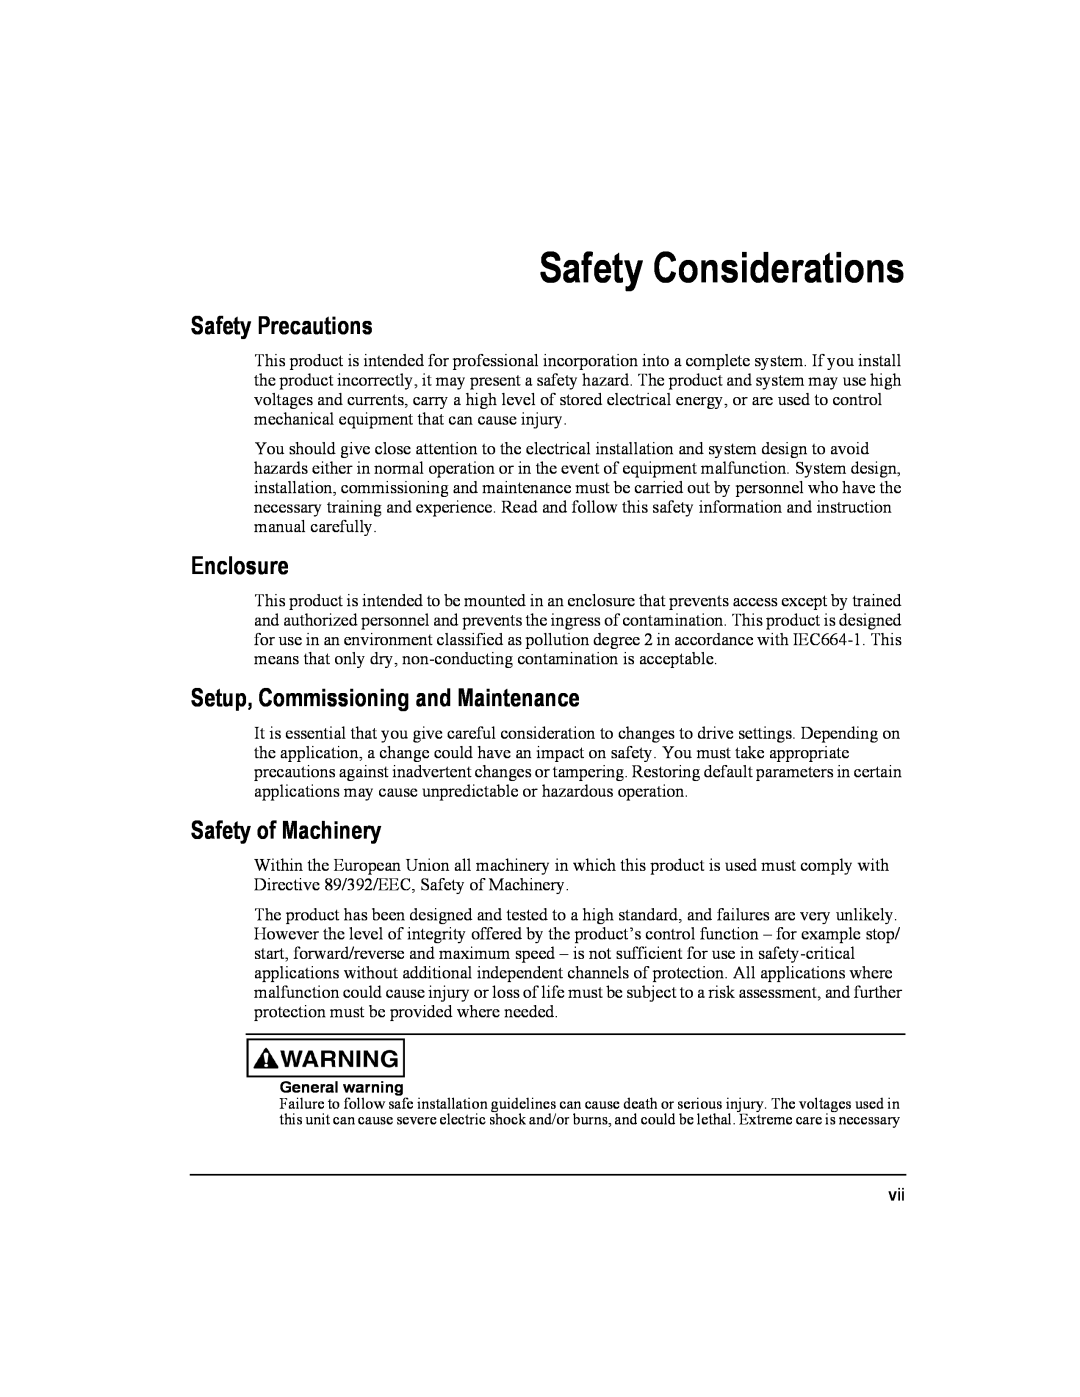 Emerson Epsilon Eb Digital Servo Drive Safety Considerations, Safety Precautions, Enclosure, Safety of Machinery 